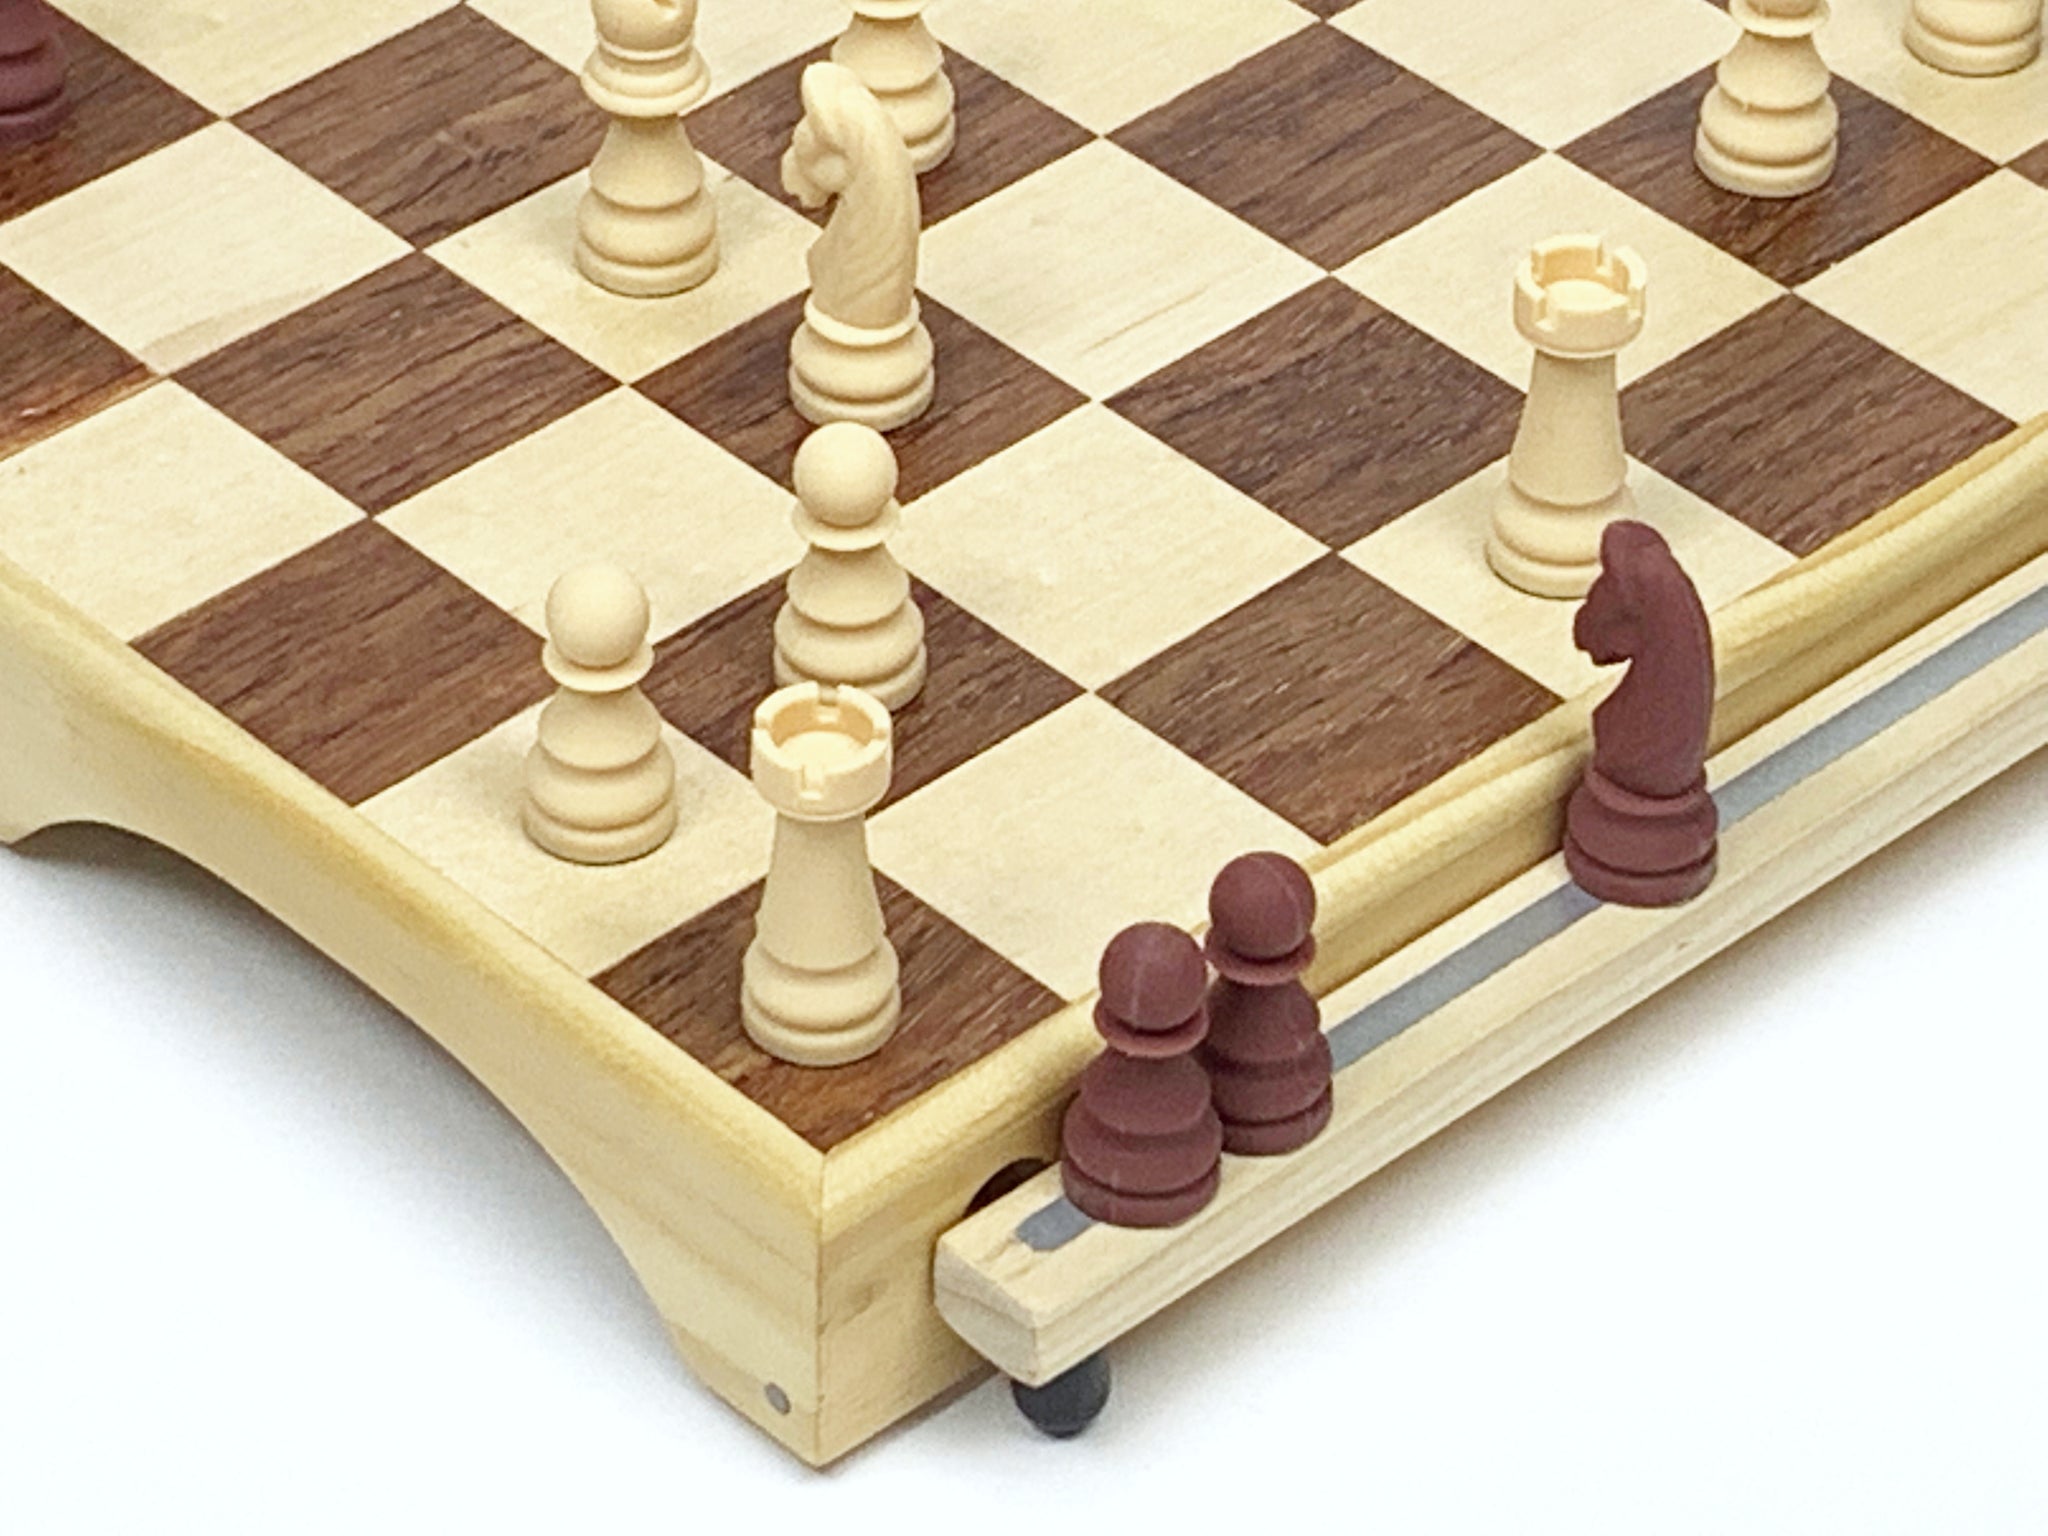 Chess Board Game Felt Bag